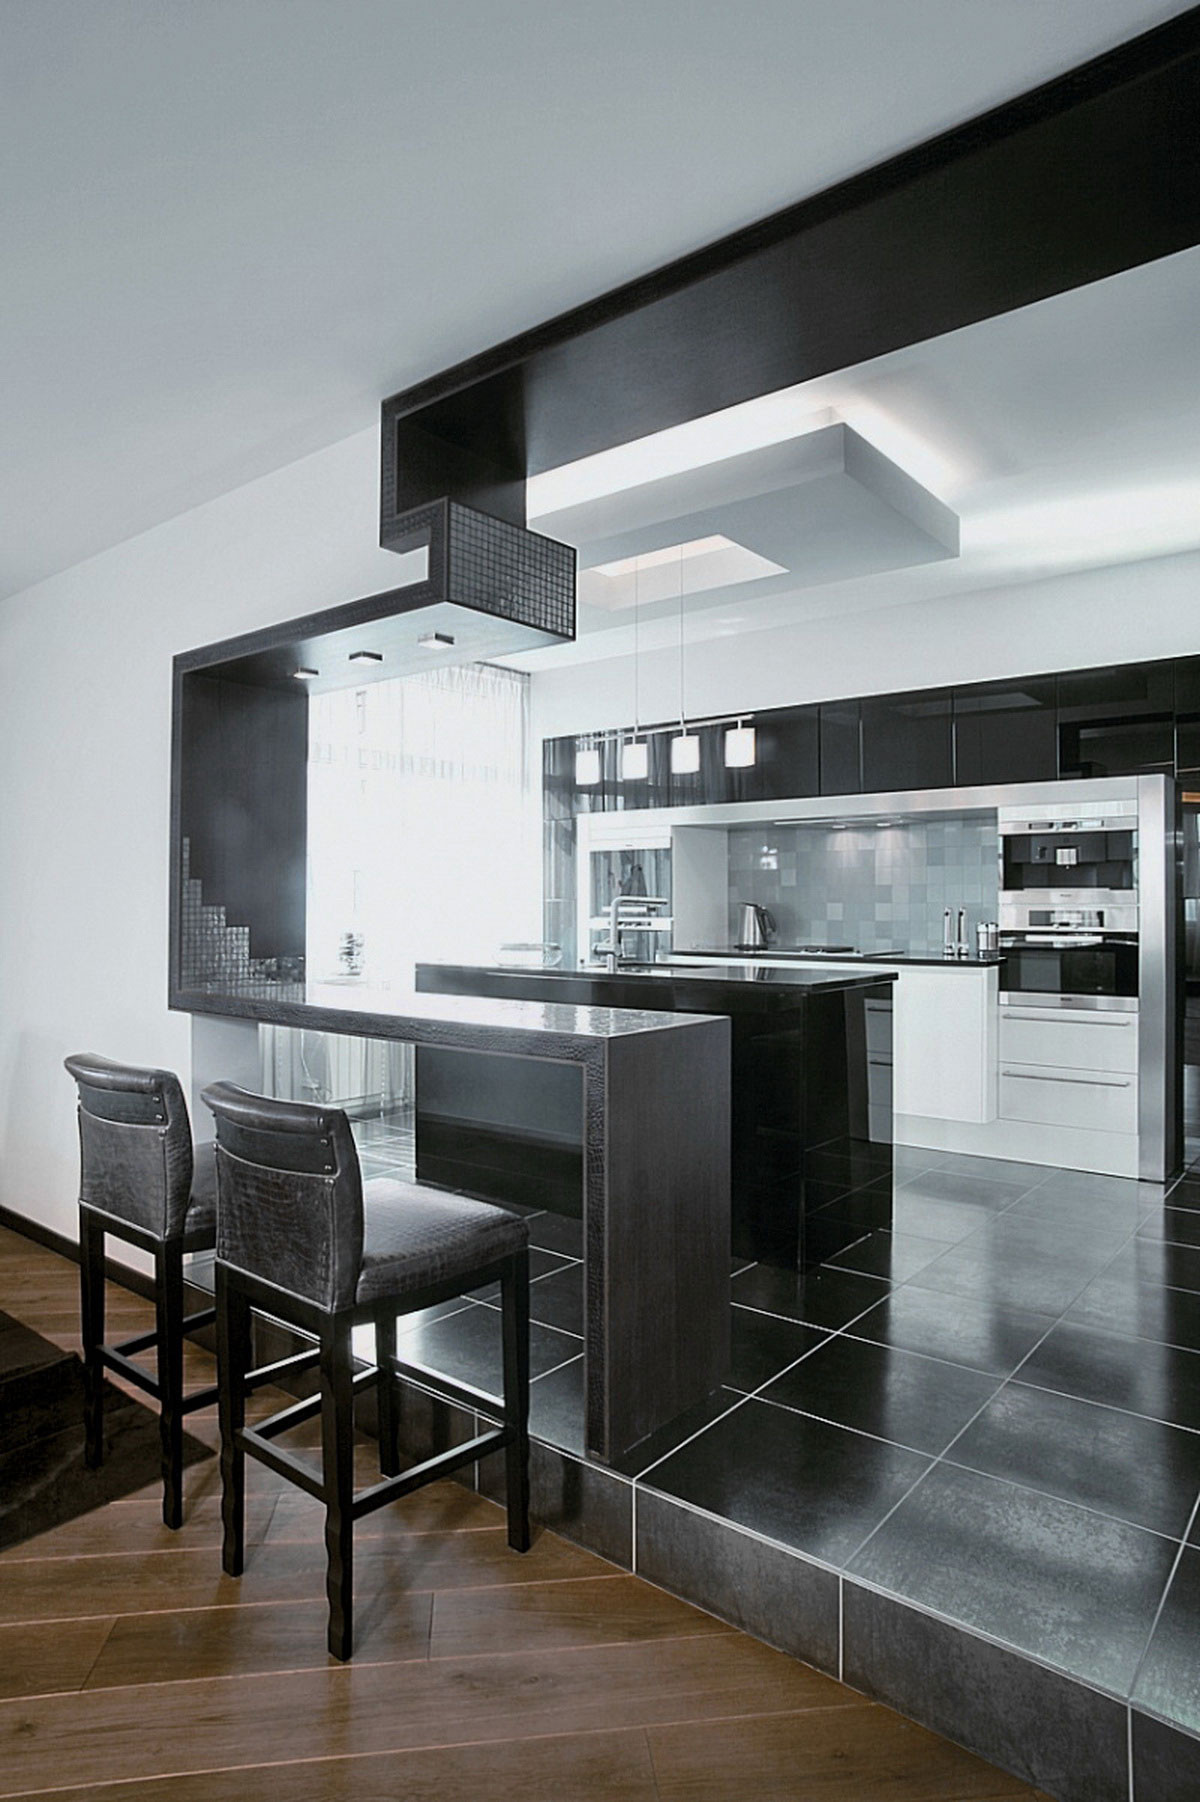 Best ideas about Modern Kitchen Decor
. Save or Pin 25 Modern Small Kitchen Design Ideas Now.